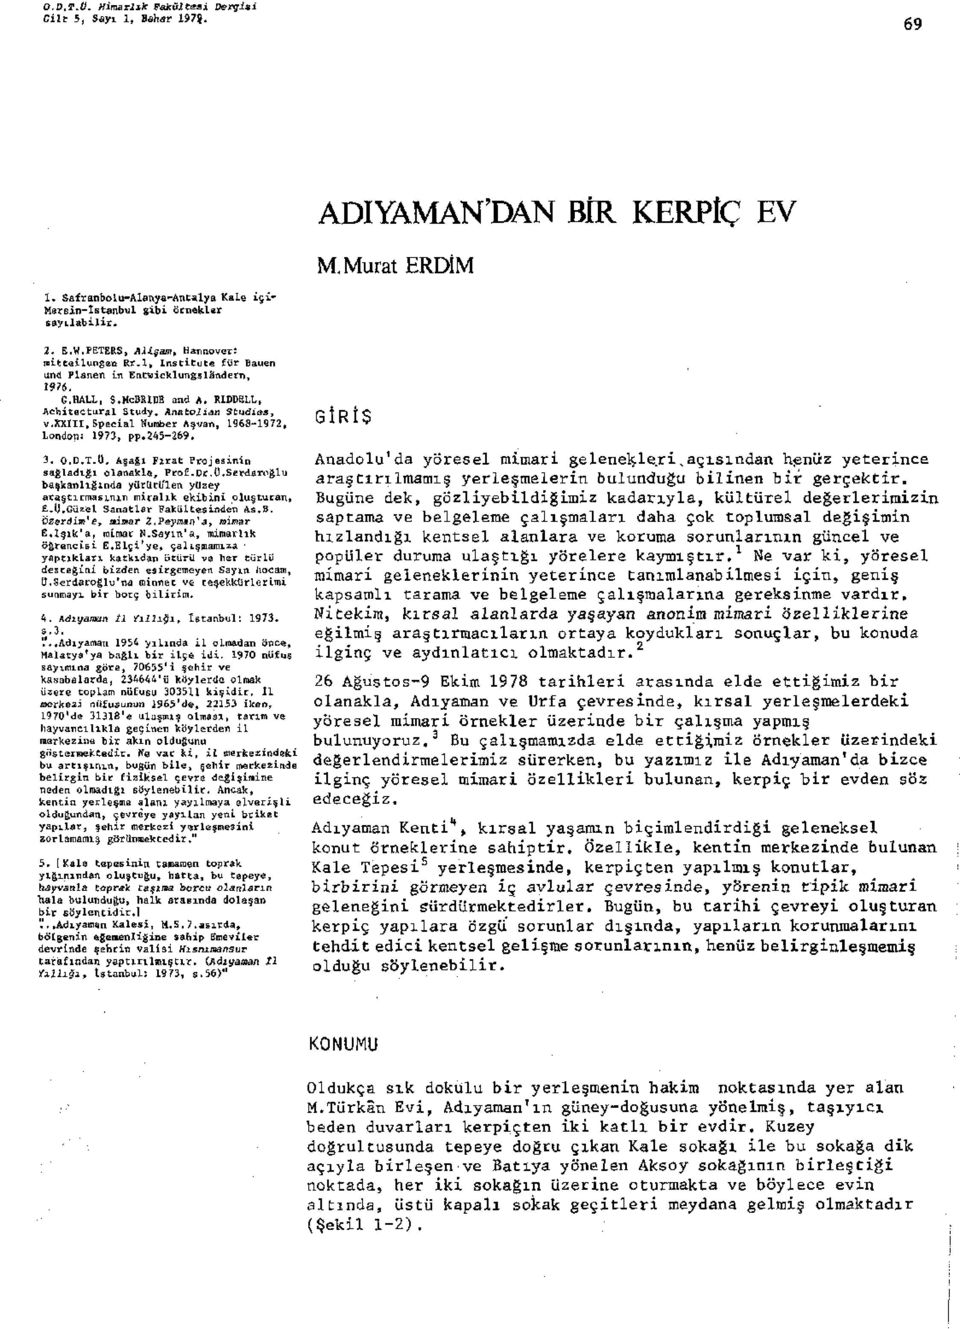 xxiii, Special Number Aşvan, 1968-1972, London: 1973, pp.245-269. 3. O.D.T.Ü. Aşağı Fırat Projesinin sağladığı olanakla, Prof.Dr.U.